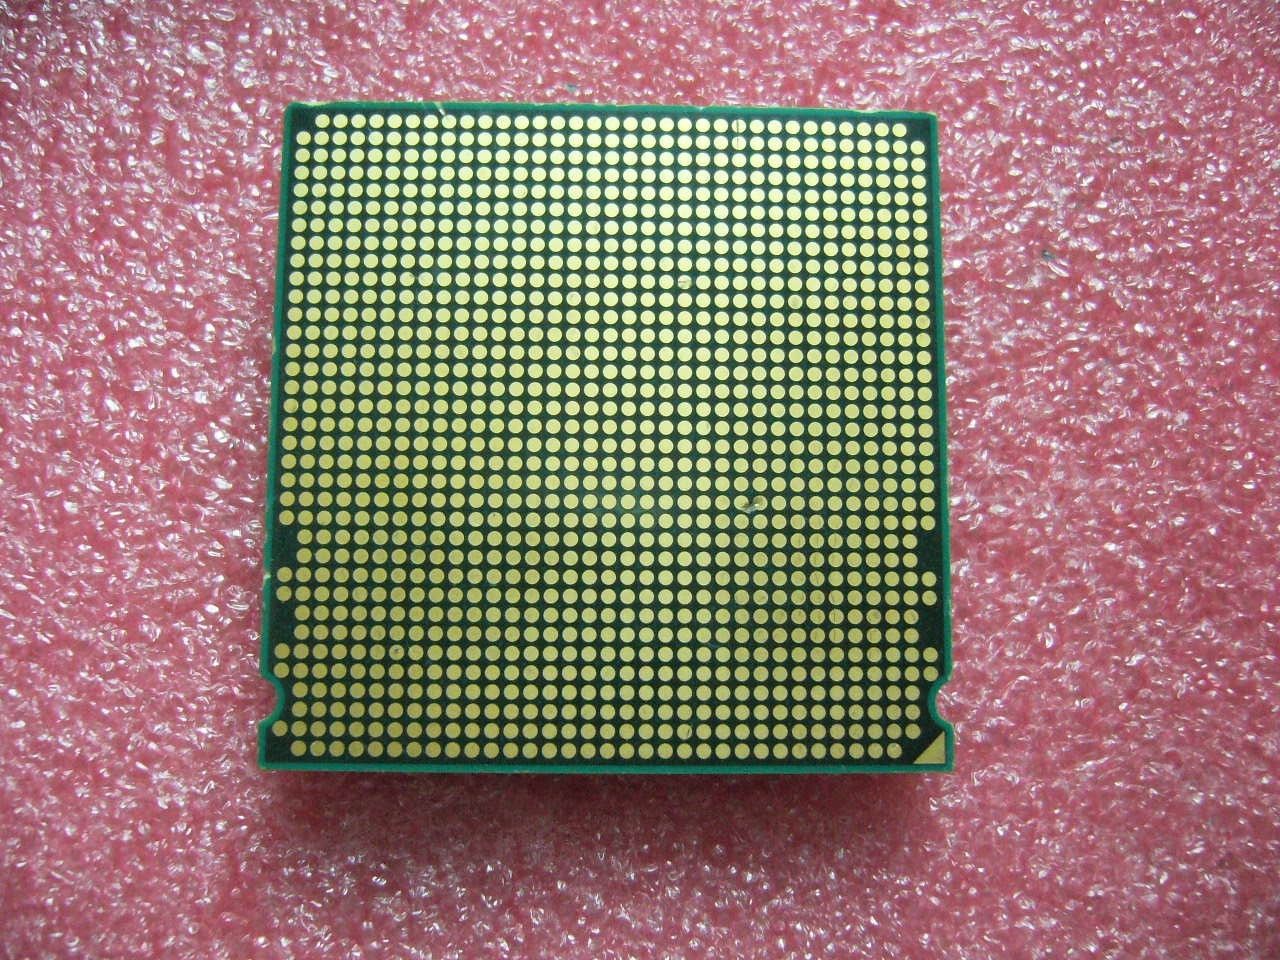 QTY 1x AMD Opteron 4164 EE 1.8 GHz Six Core (OS4164HJU6DGO) CPU Socket C32 - Click Image to Close